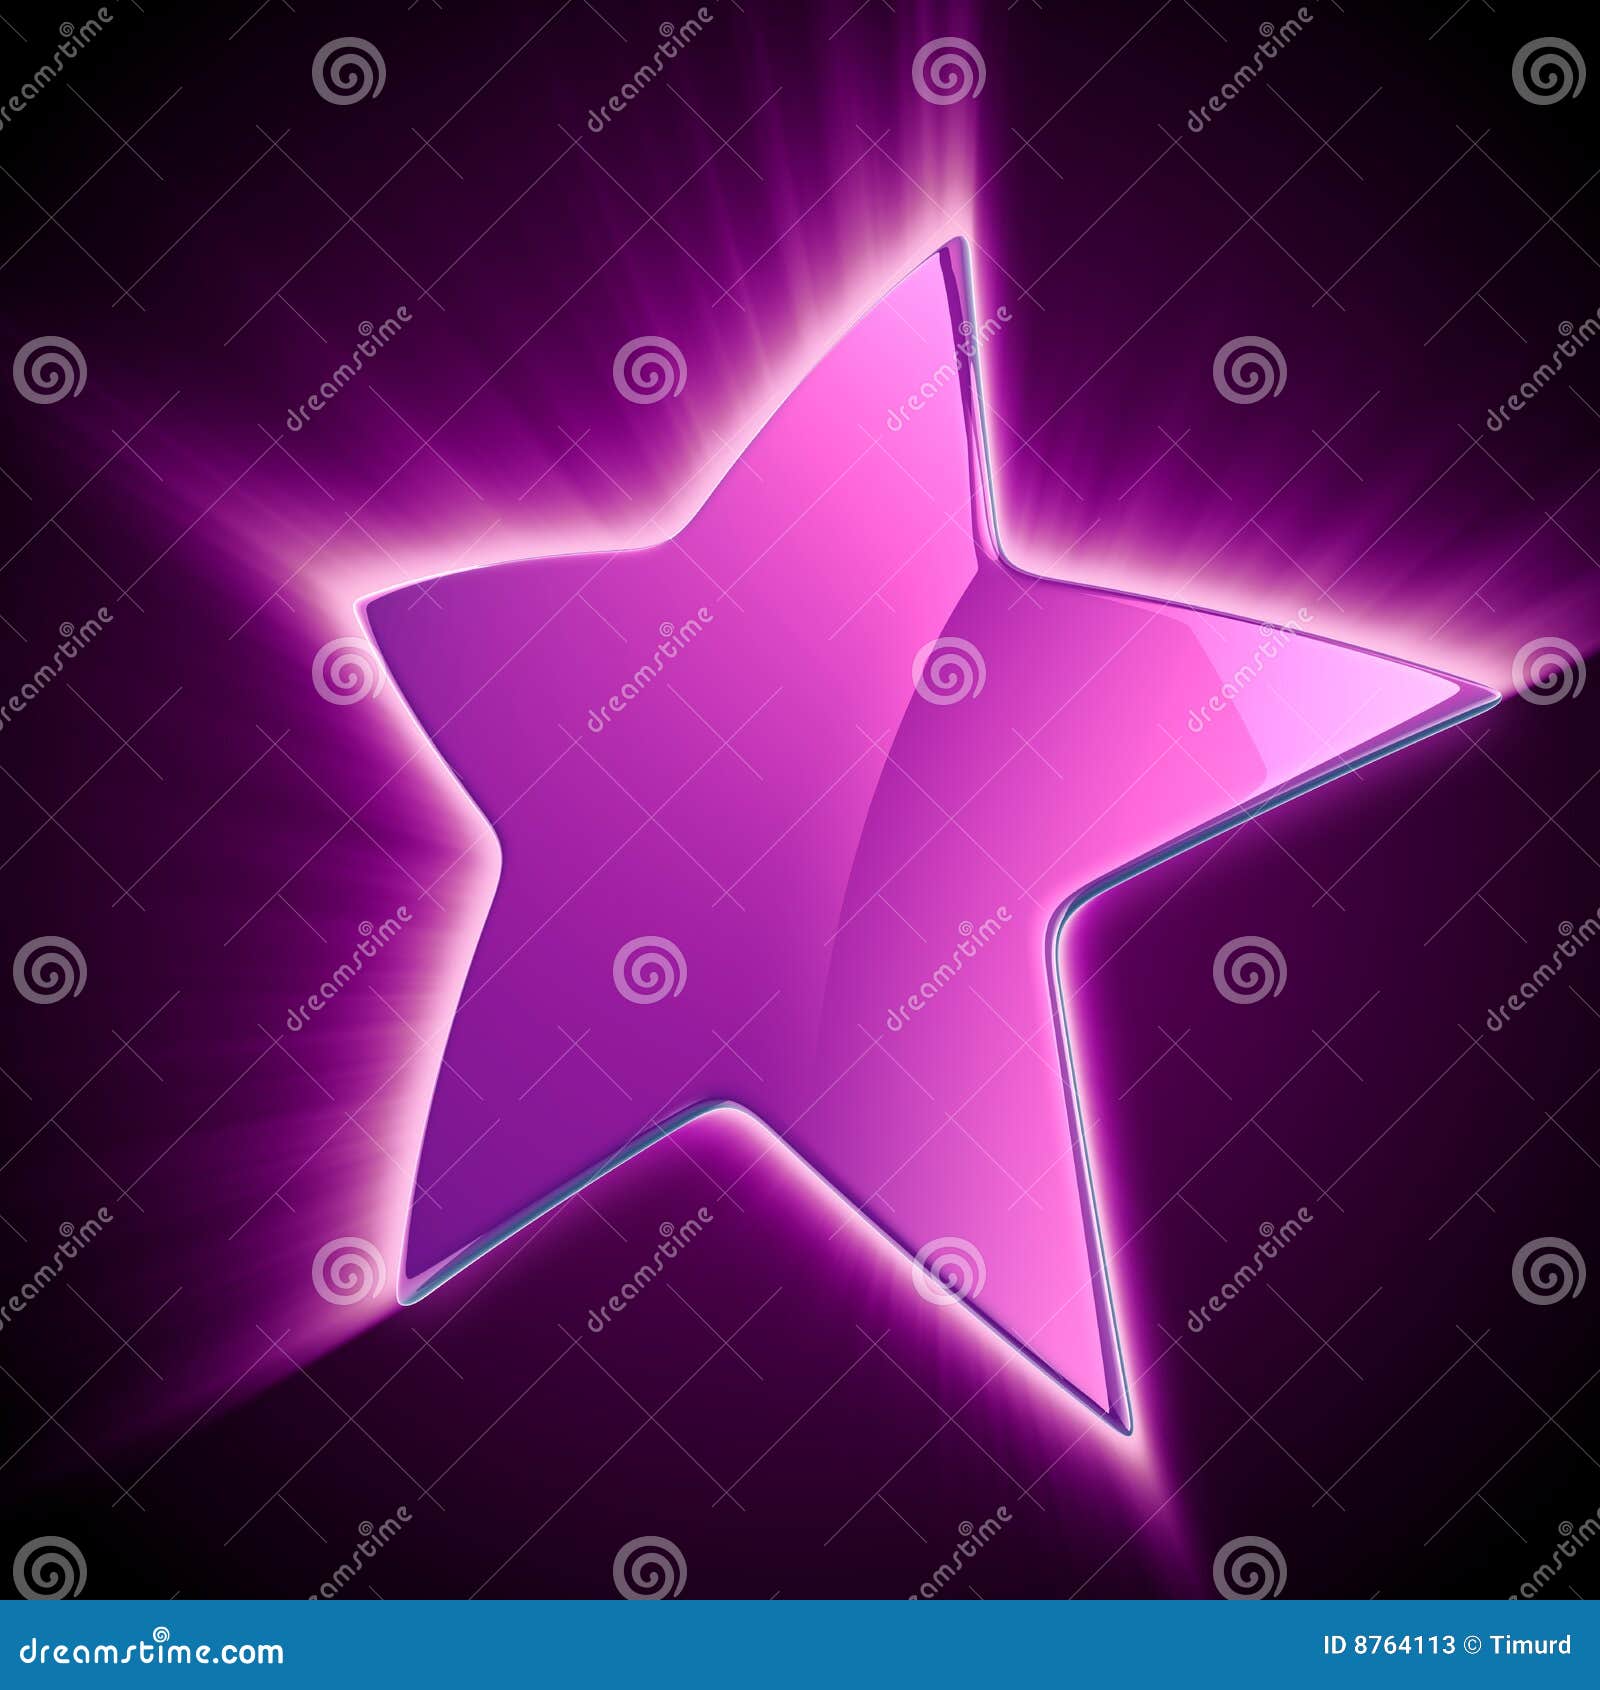 Violet star blacked